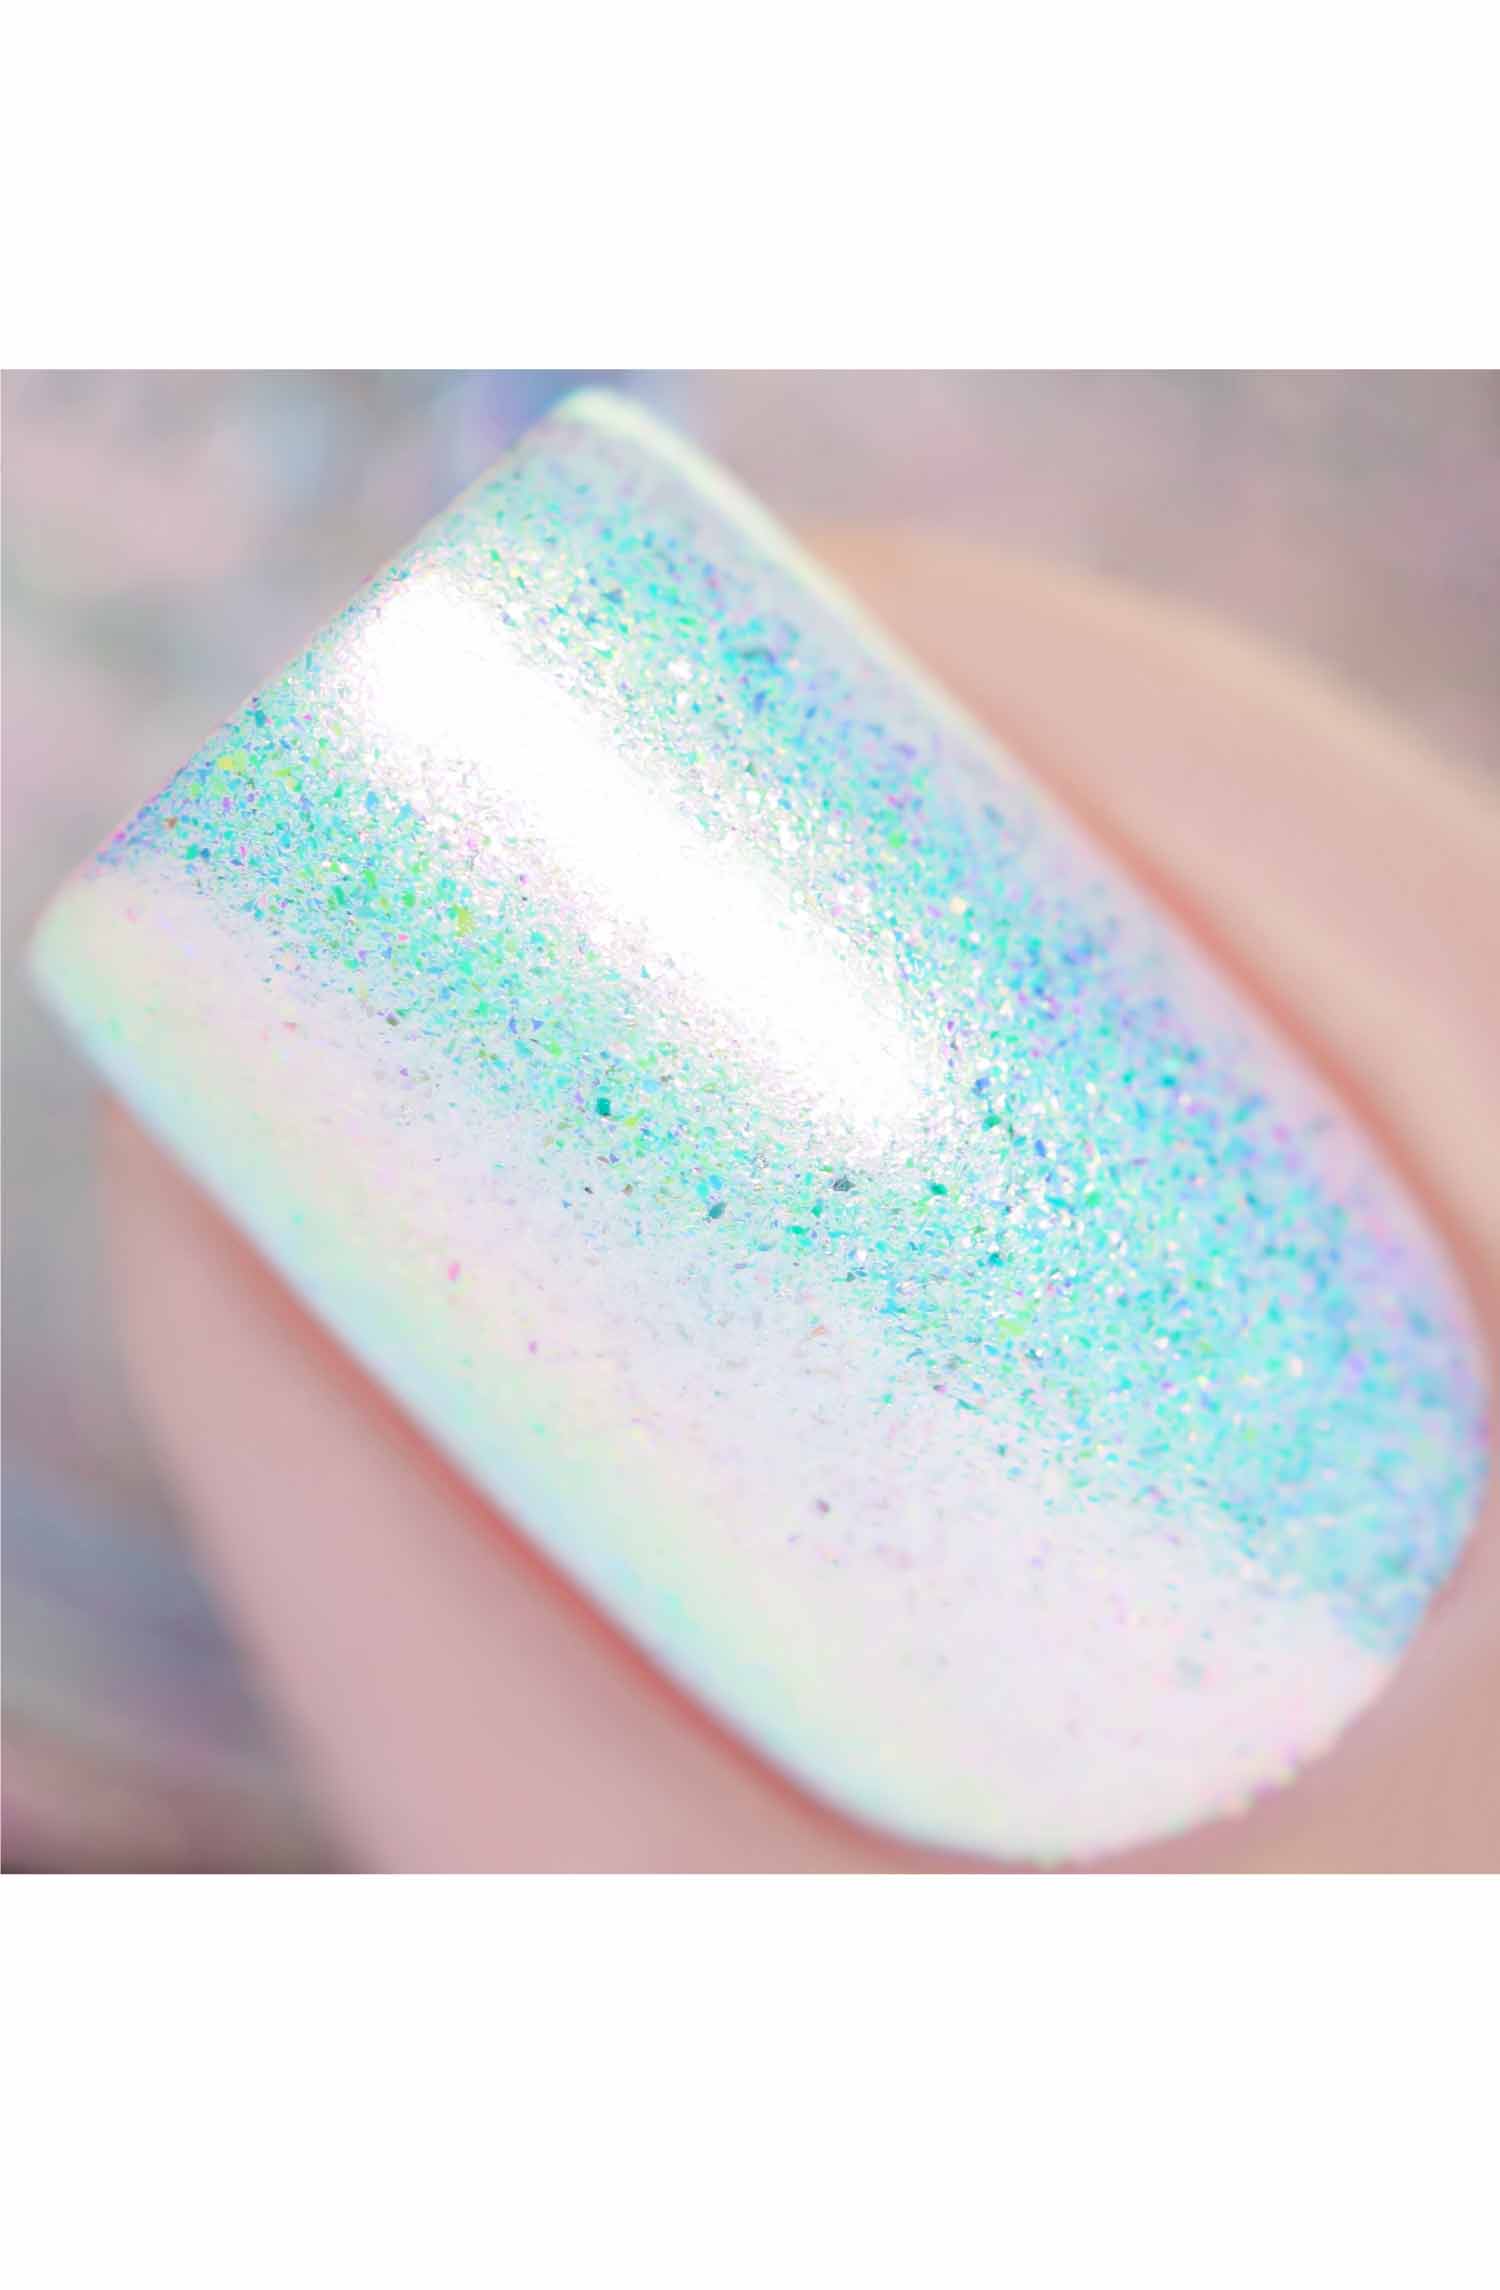 6Pcs/Set Pearl Nail Powder with Brush Aurora Chrome Powder Shimmer White  Glitter Mermaid Rubbing Dust Pigment Manicure Magic Moonlight Effect  Iridescent Pigment… | Pearl nails, Powder nails, Chrome powder